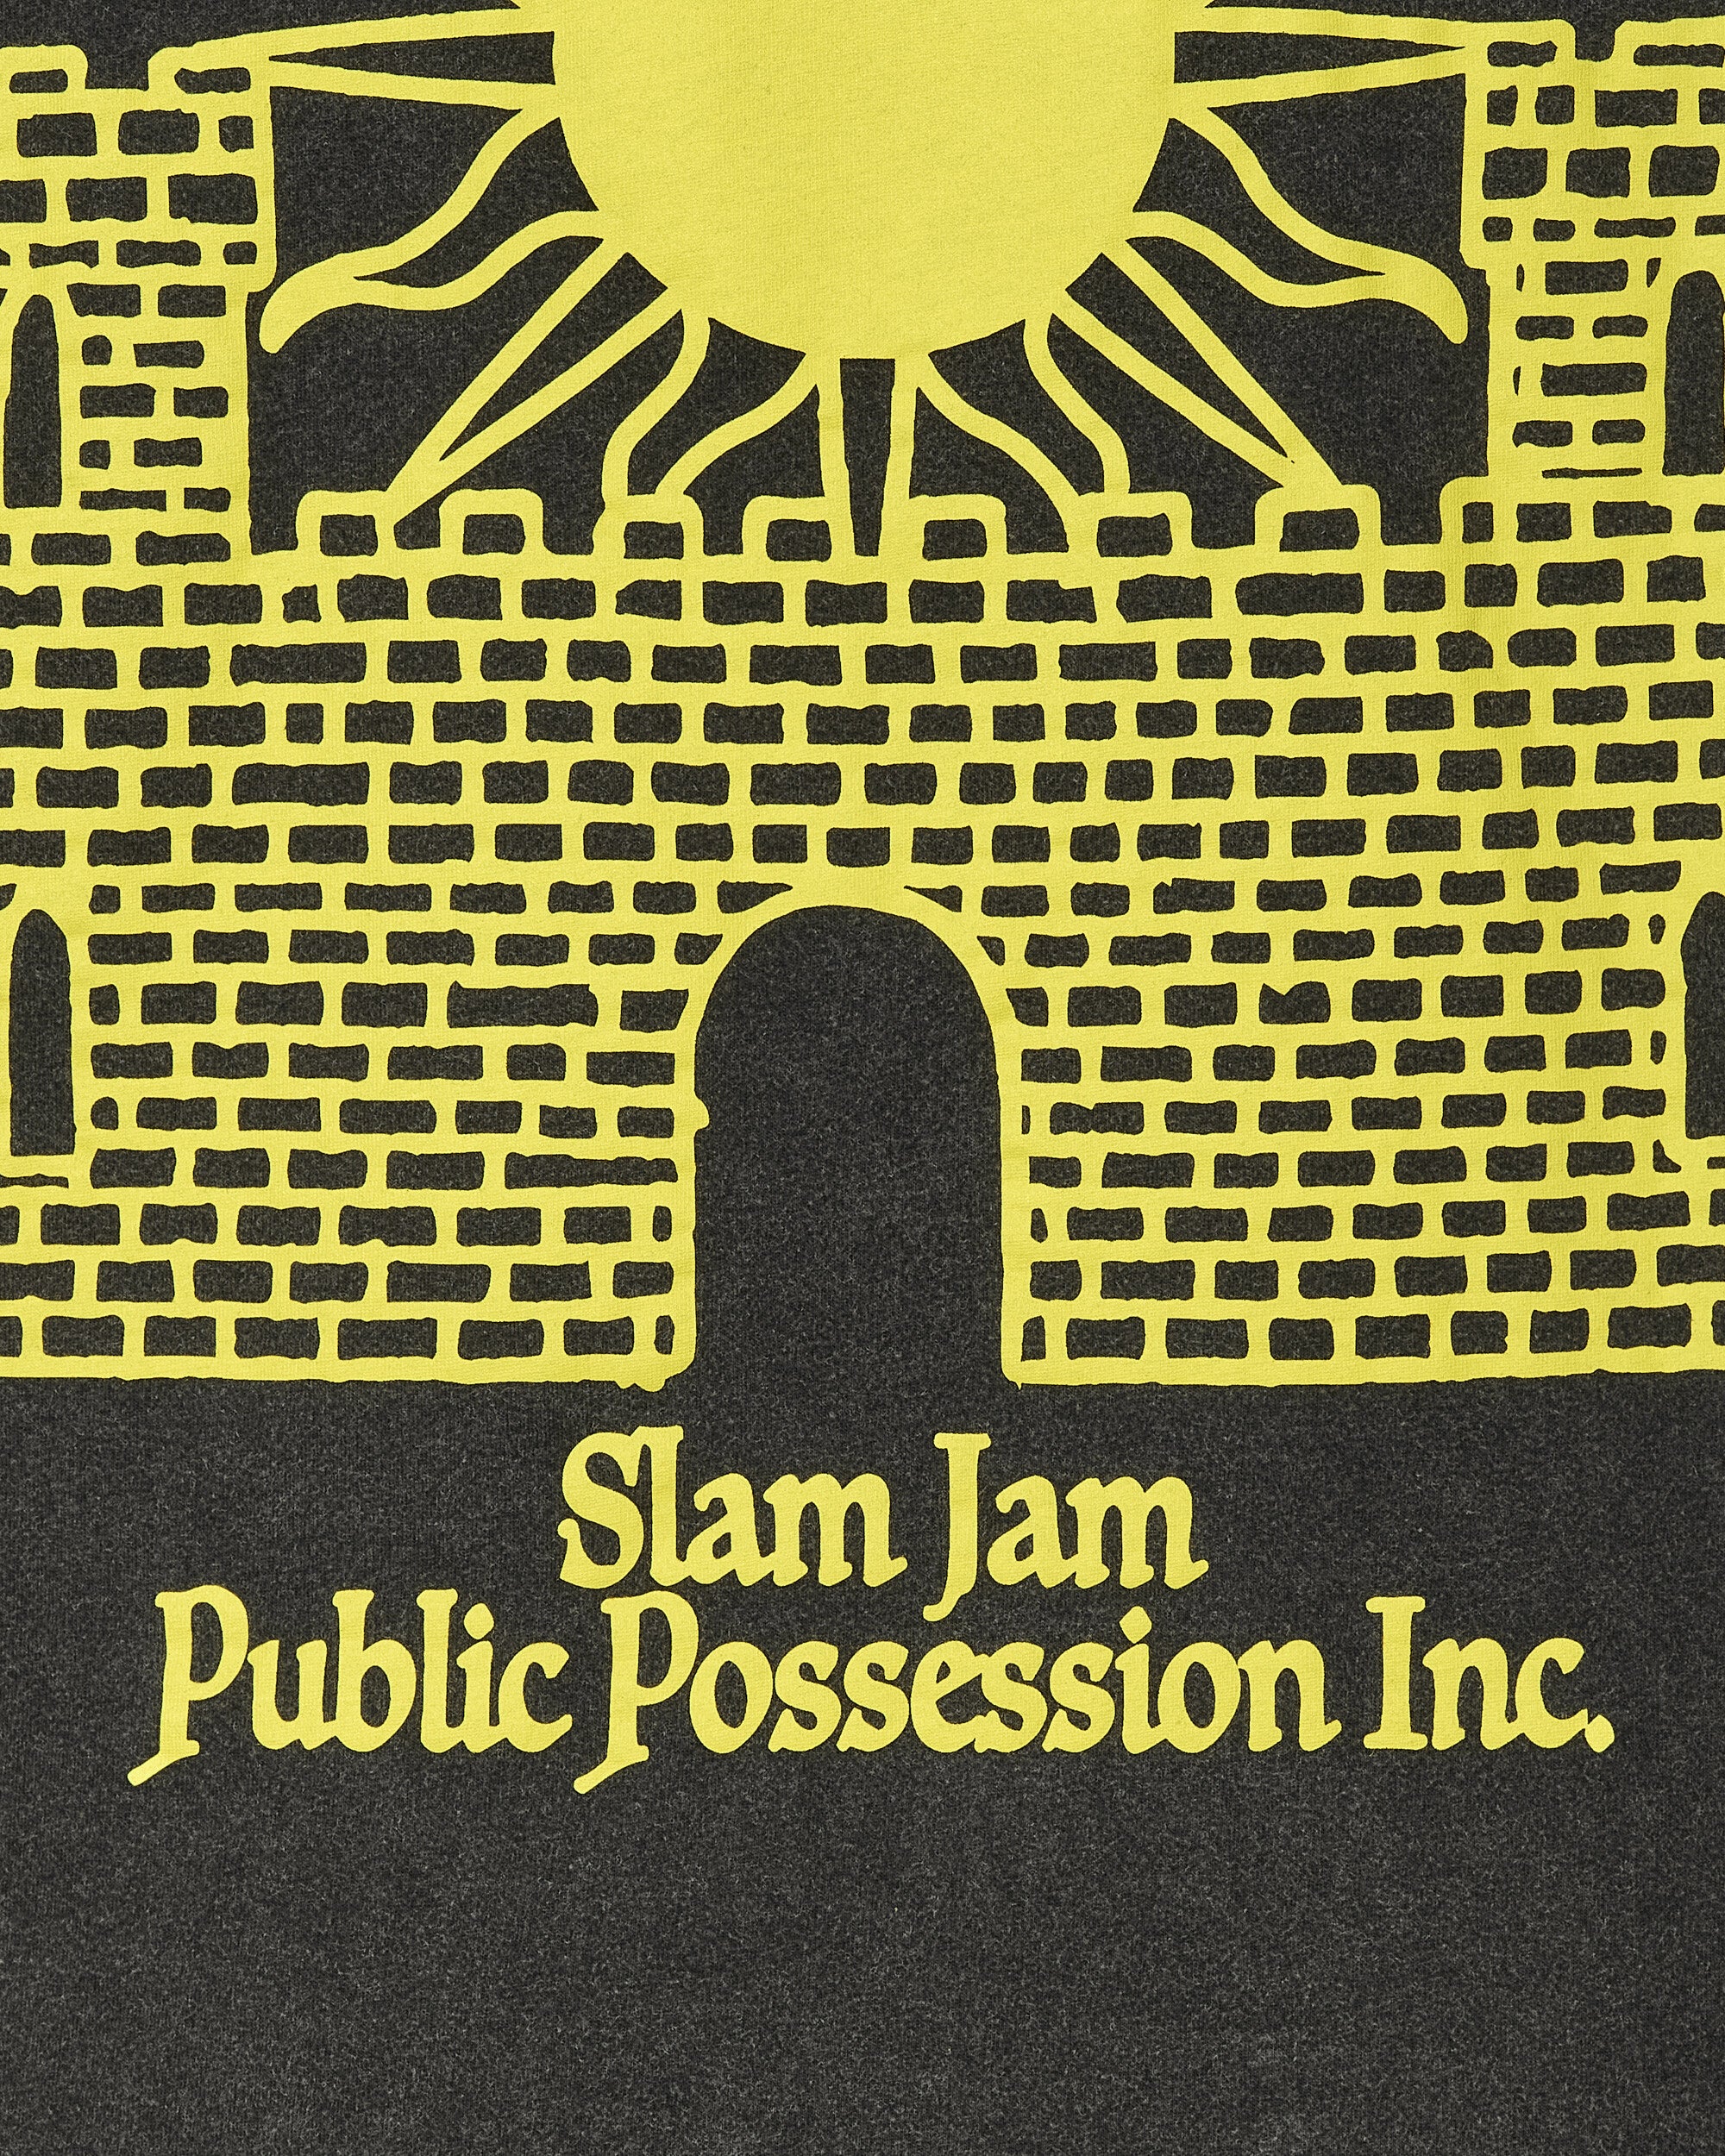 Public Possession "My Castle Is Your Castle" T-Shirt Pebble Black T-Shirts Shortsleeve PPMODA-SL-001  1